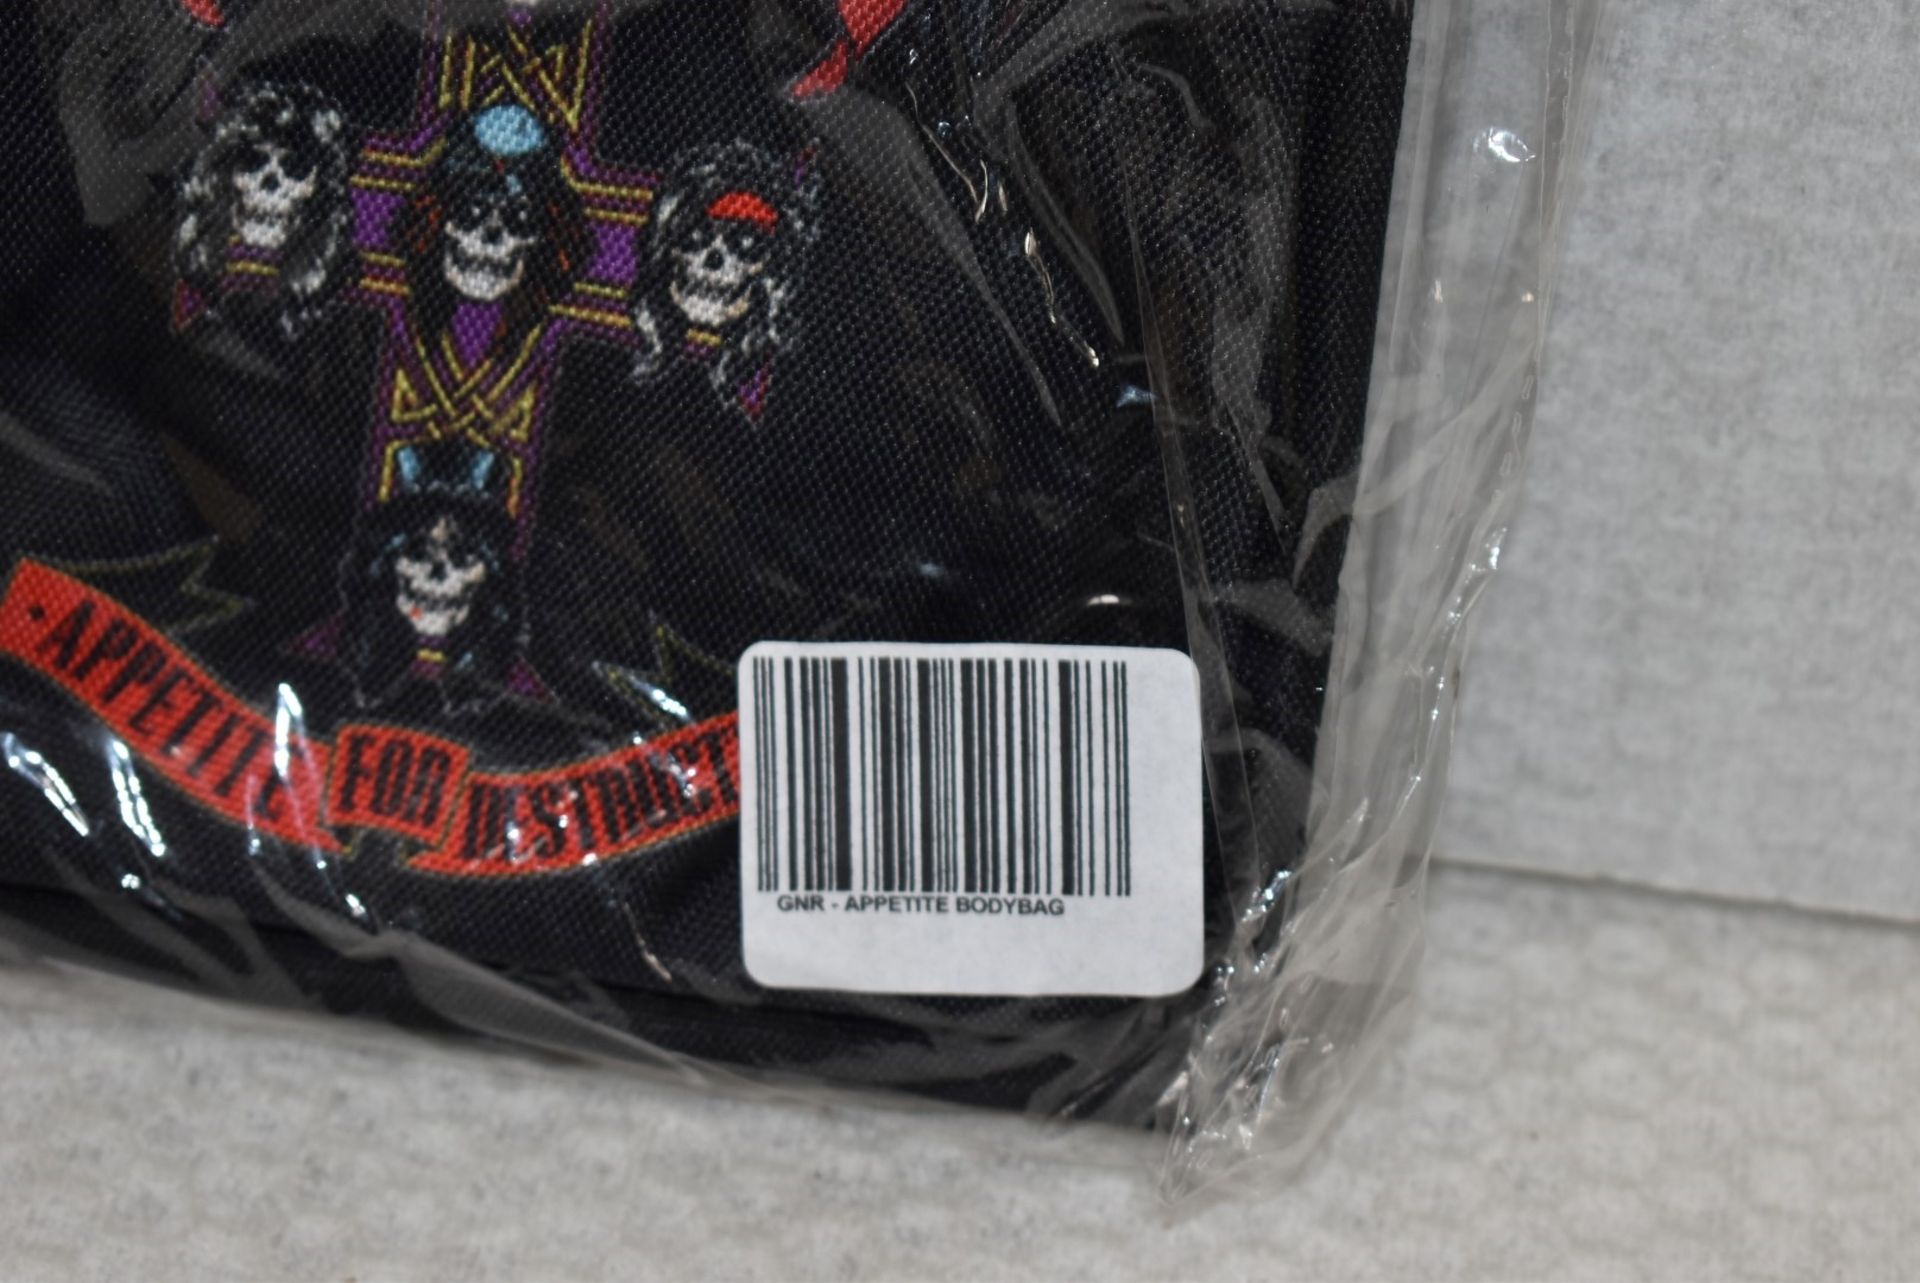 1 x Guns N Roses Cross Body Festival Bag by Rock Sax - Iconic Appetite For Destruction Logo - - Image 2 of 4